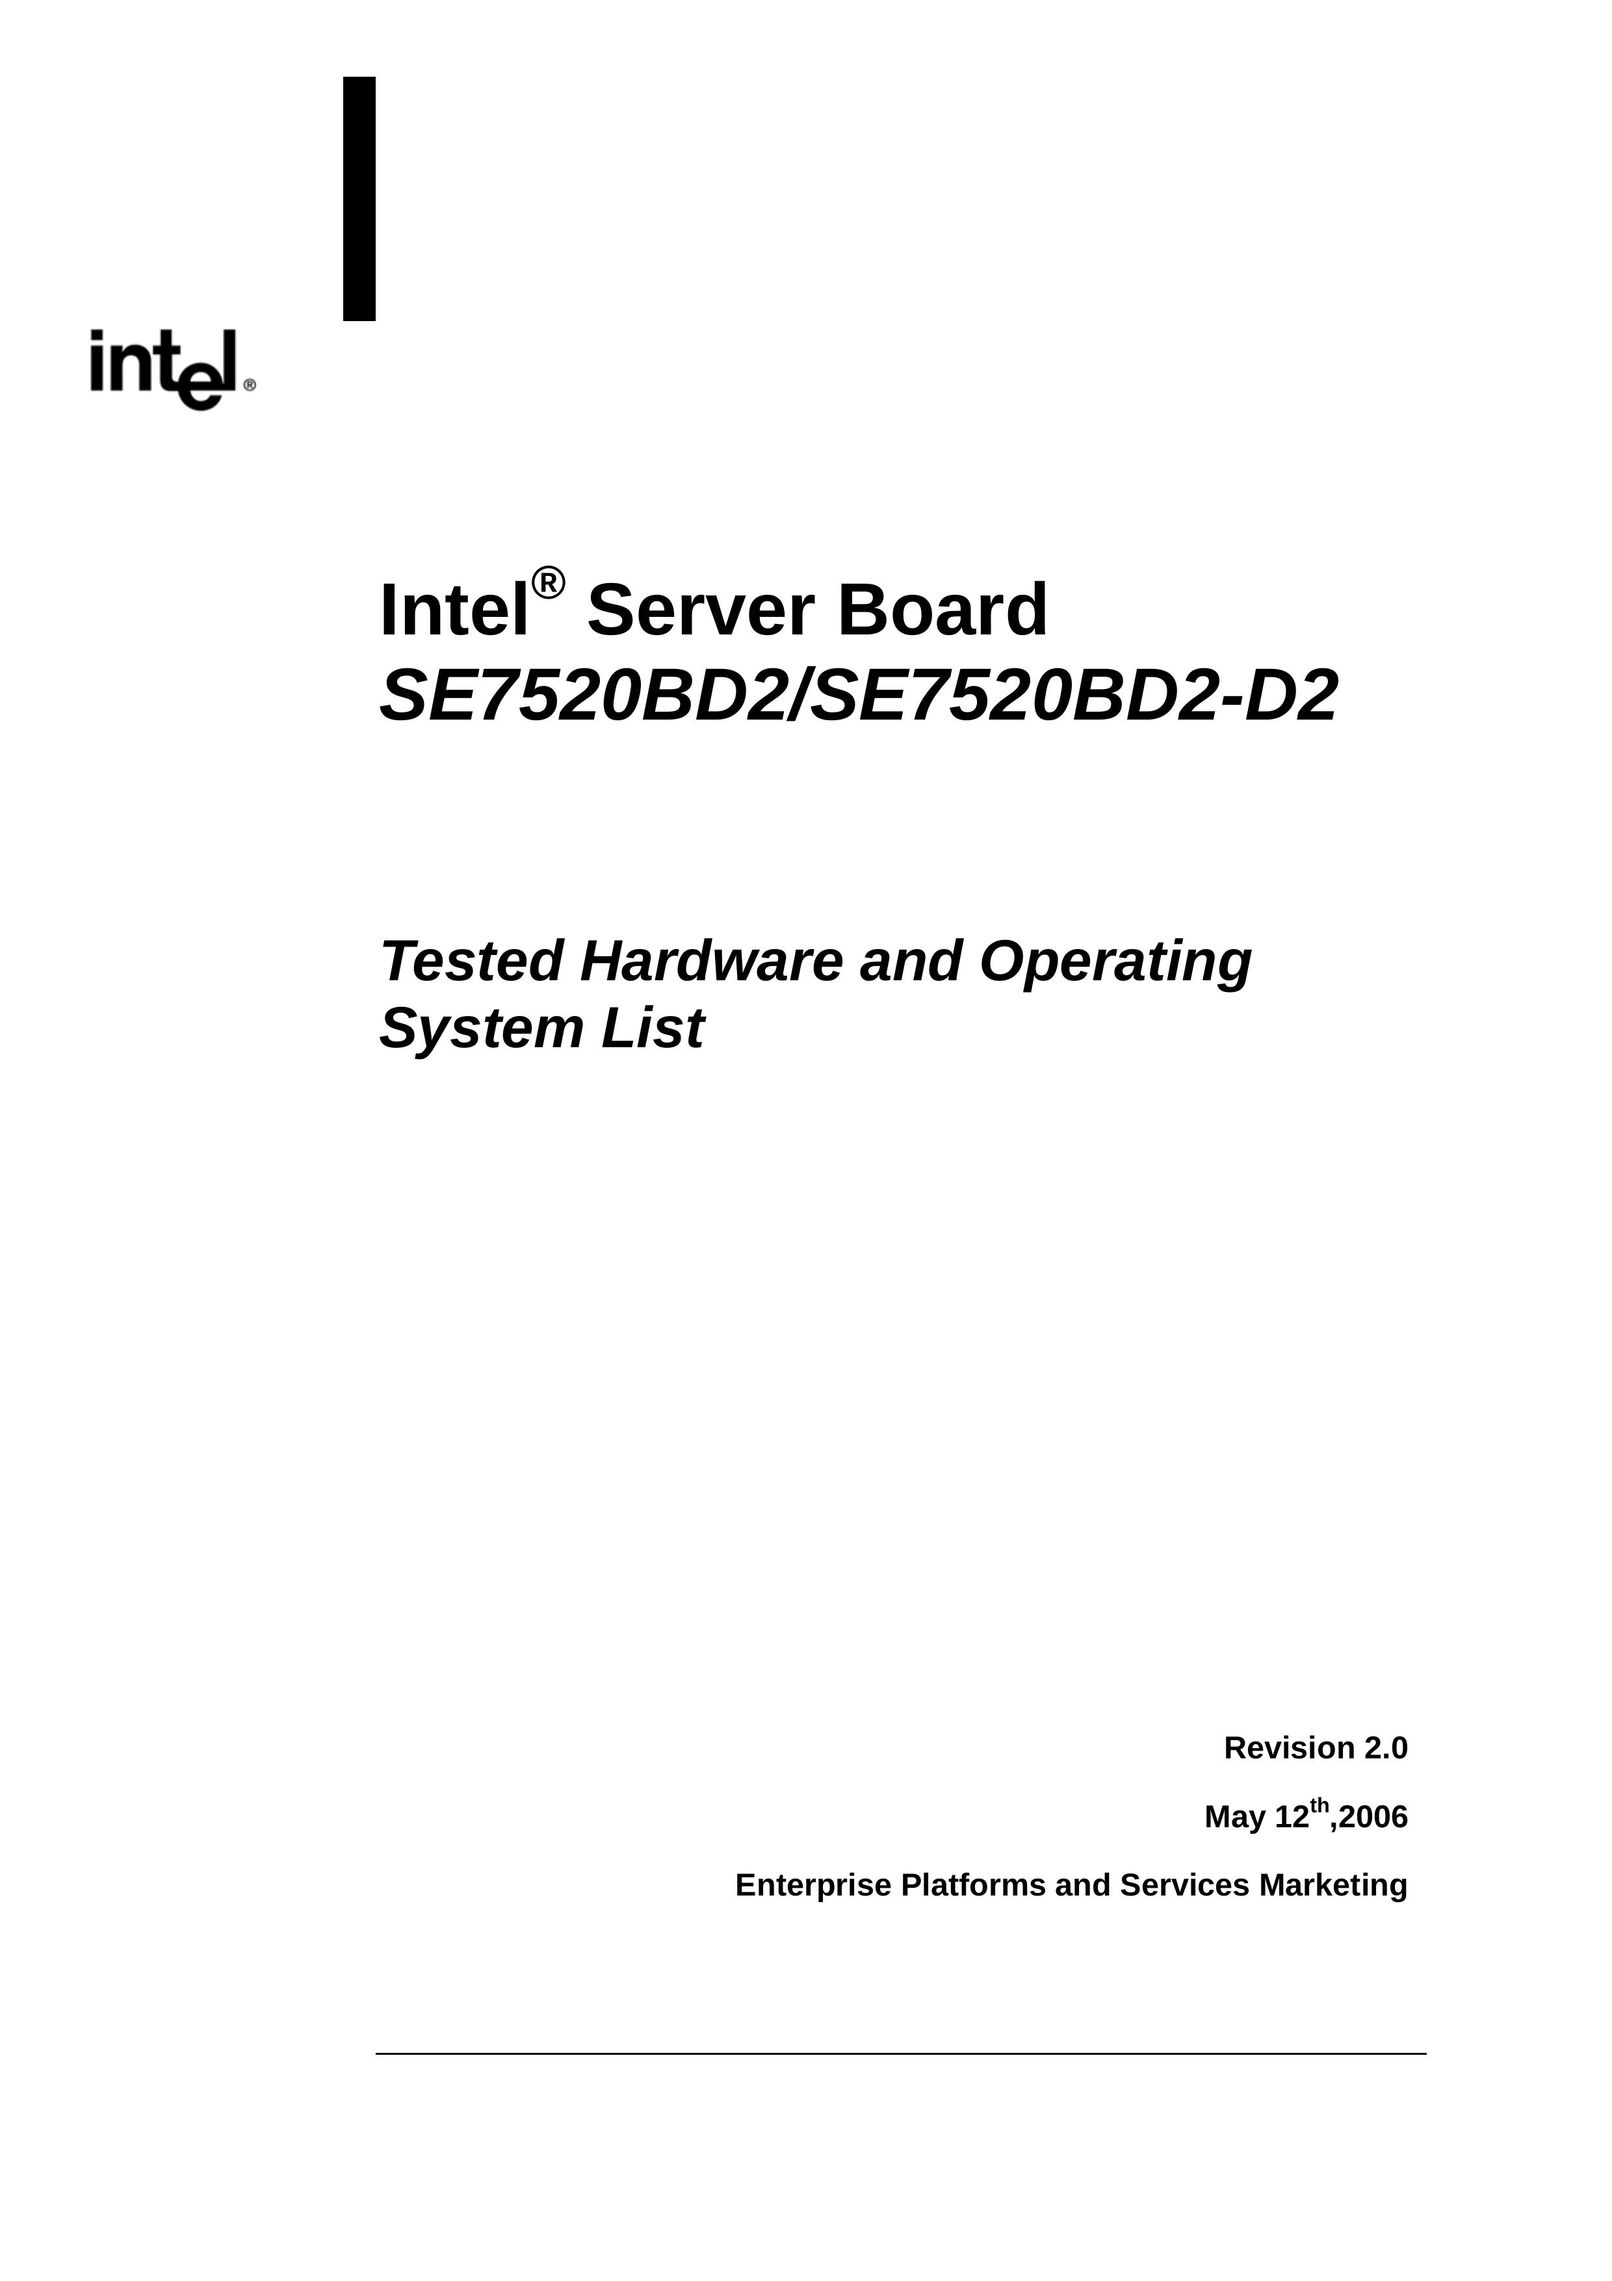 Intel SE7520BD2-D2 Server User Manual